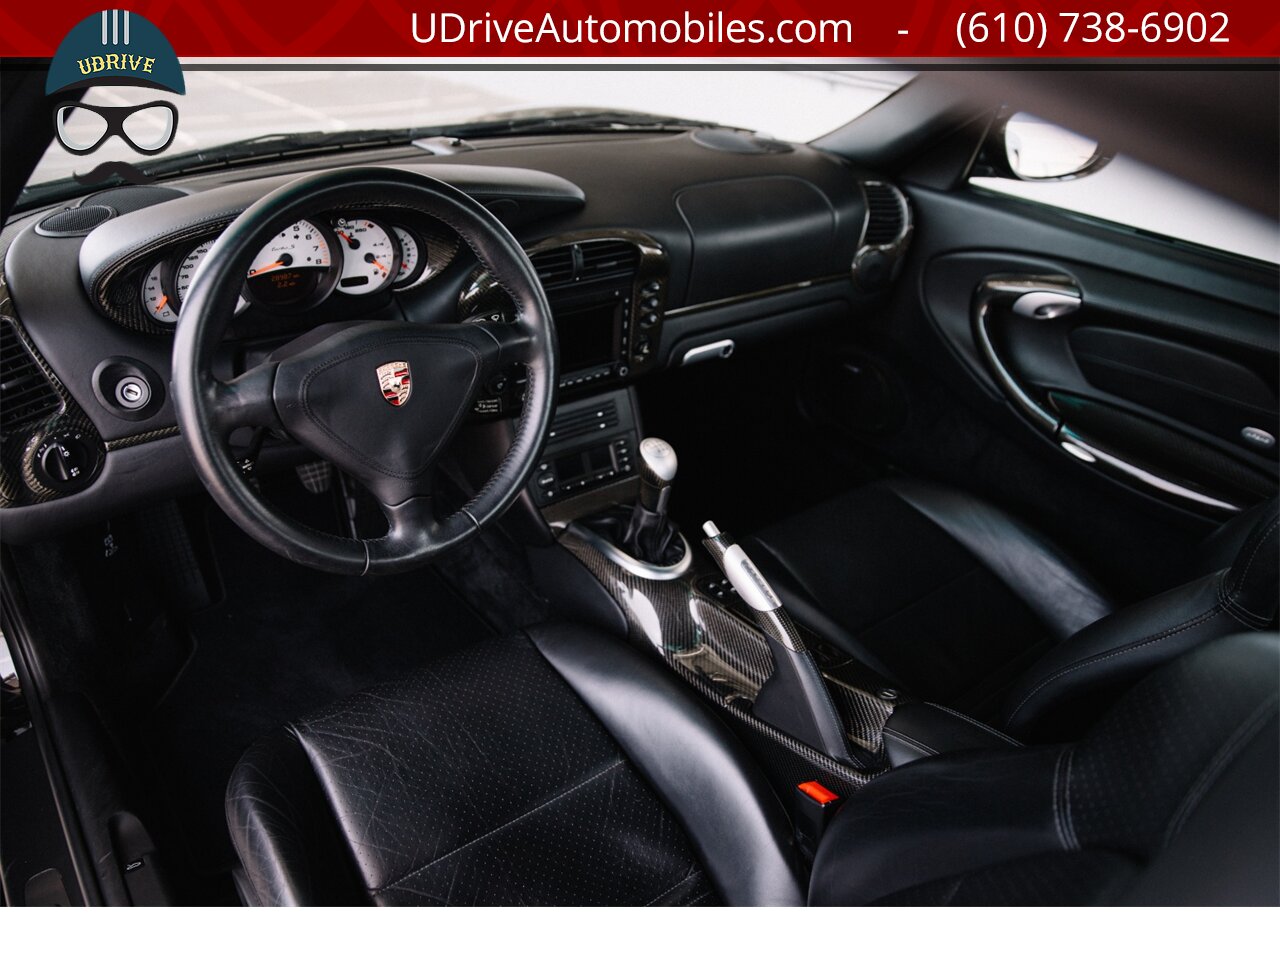 2005 Porsche 911 996 Turbo S Aerokit Sport Seats Painted Seat Backs  Sport Shifter Carbon Fiber Interior Pkg $152k MSRP - Photo 6 - West Chester, PA 19382